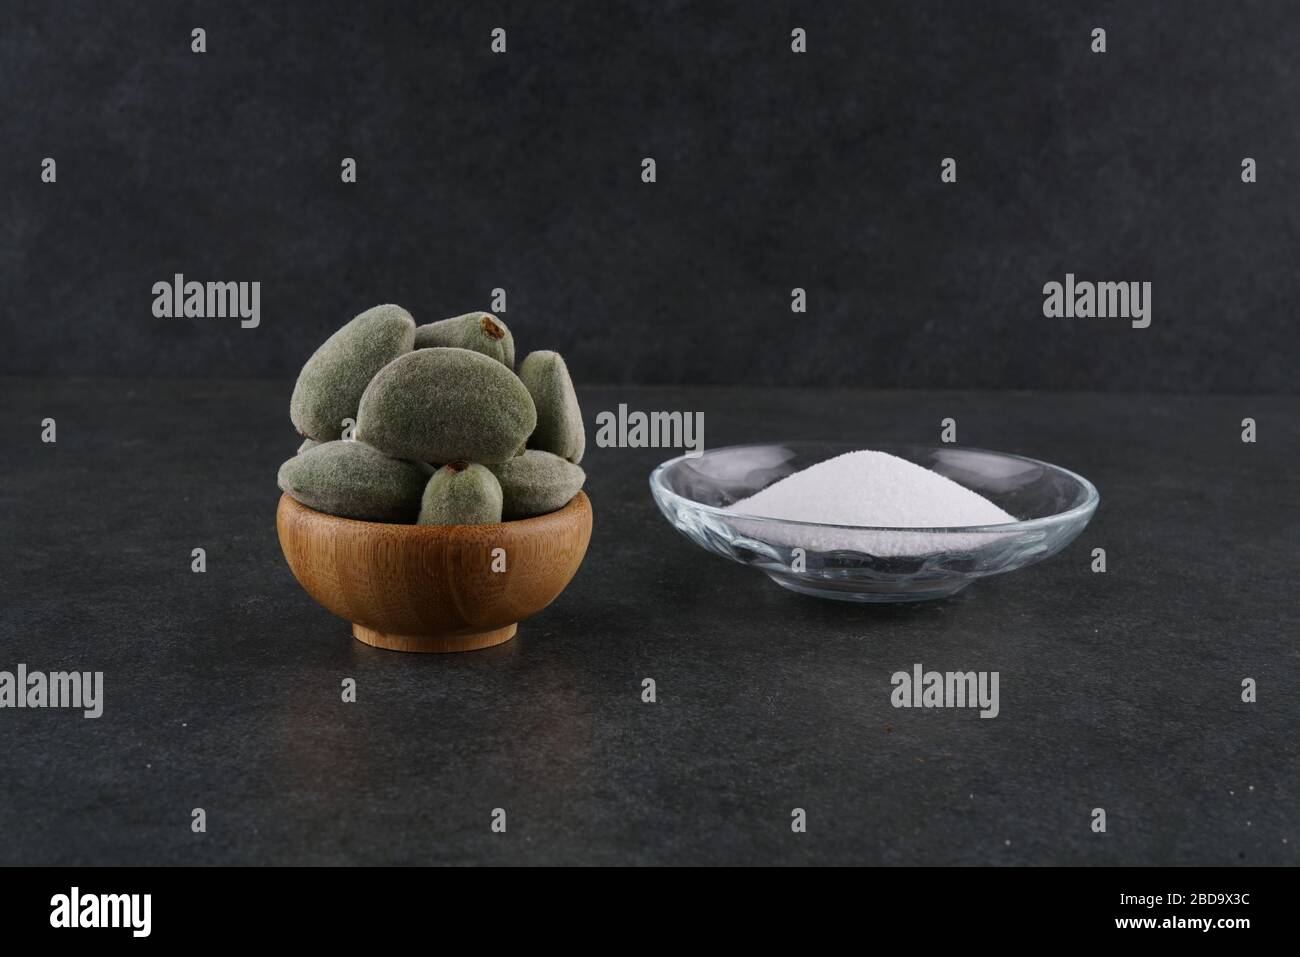 Unripe fresh almond on dark background Stock Photo